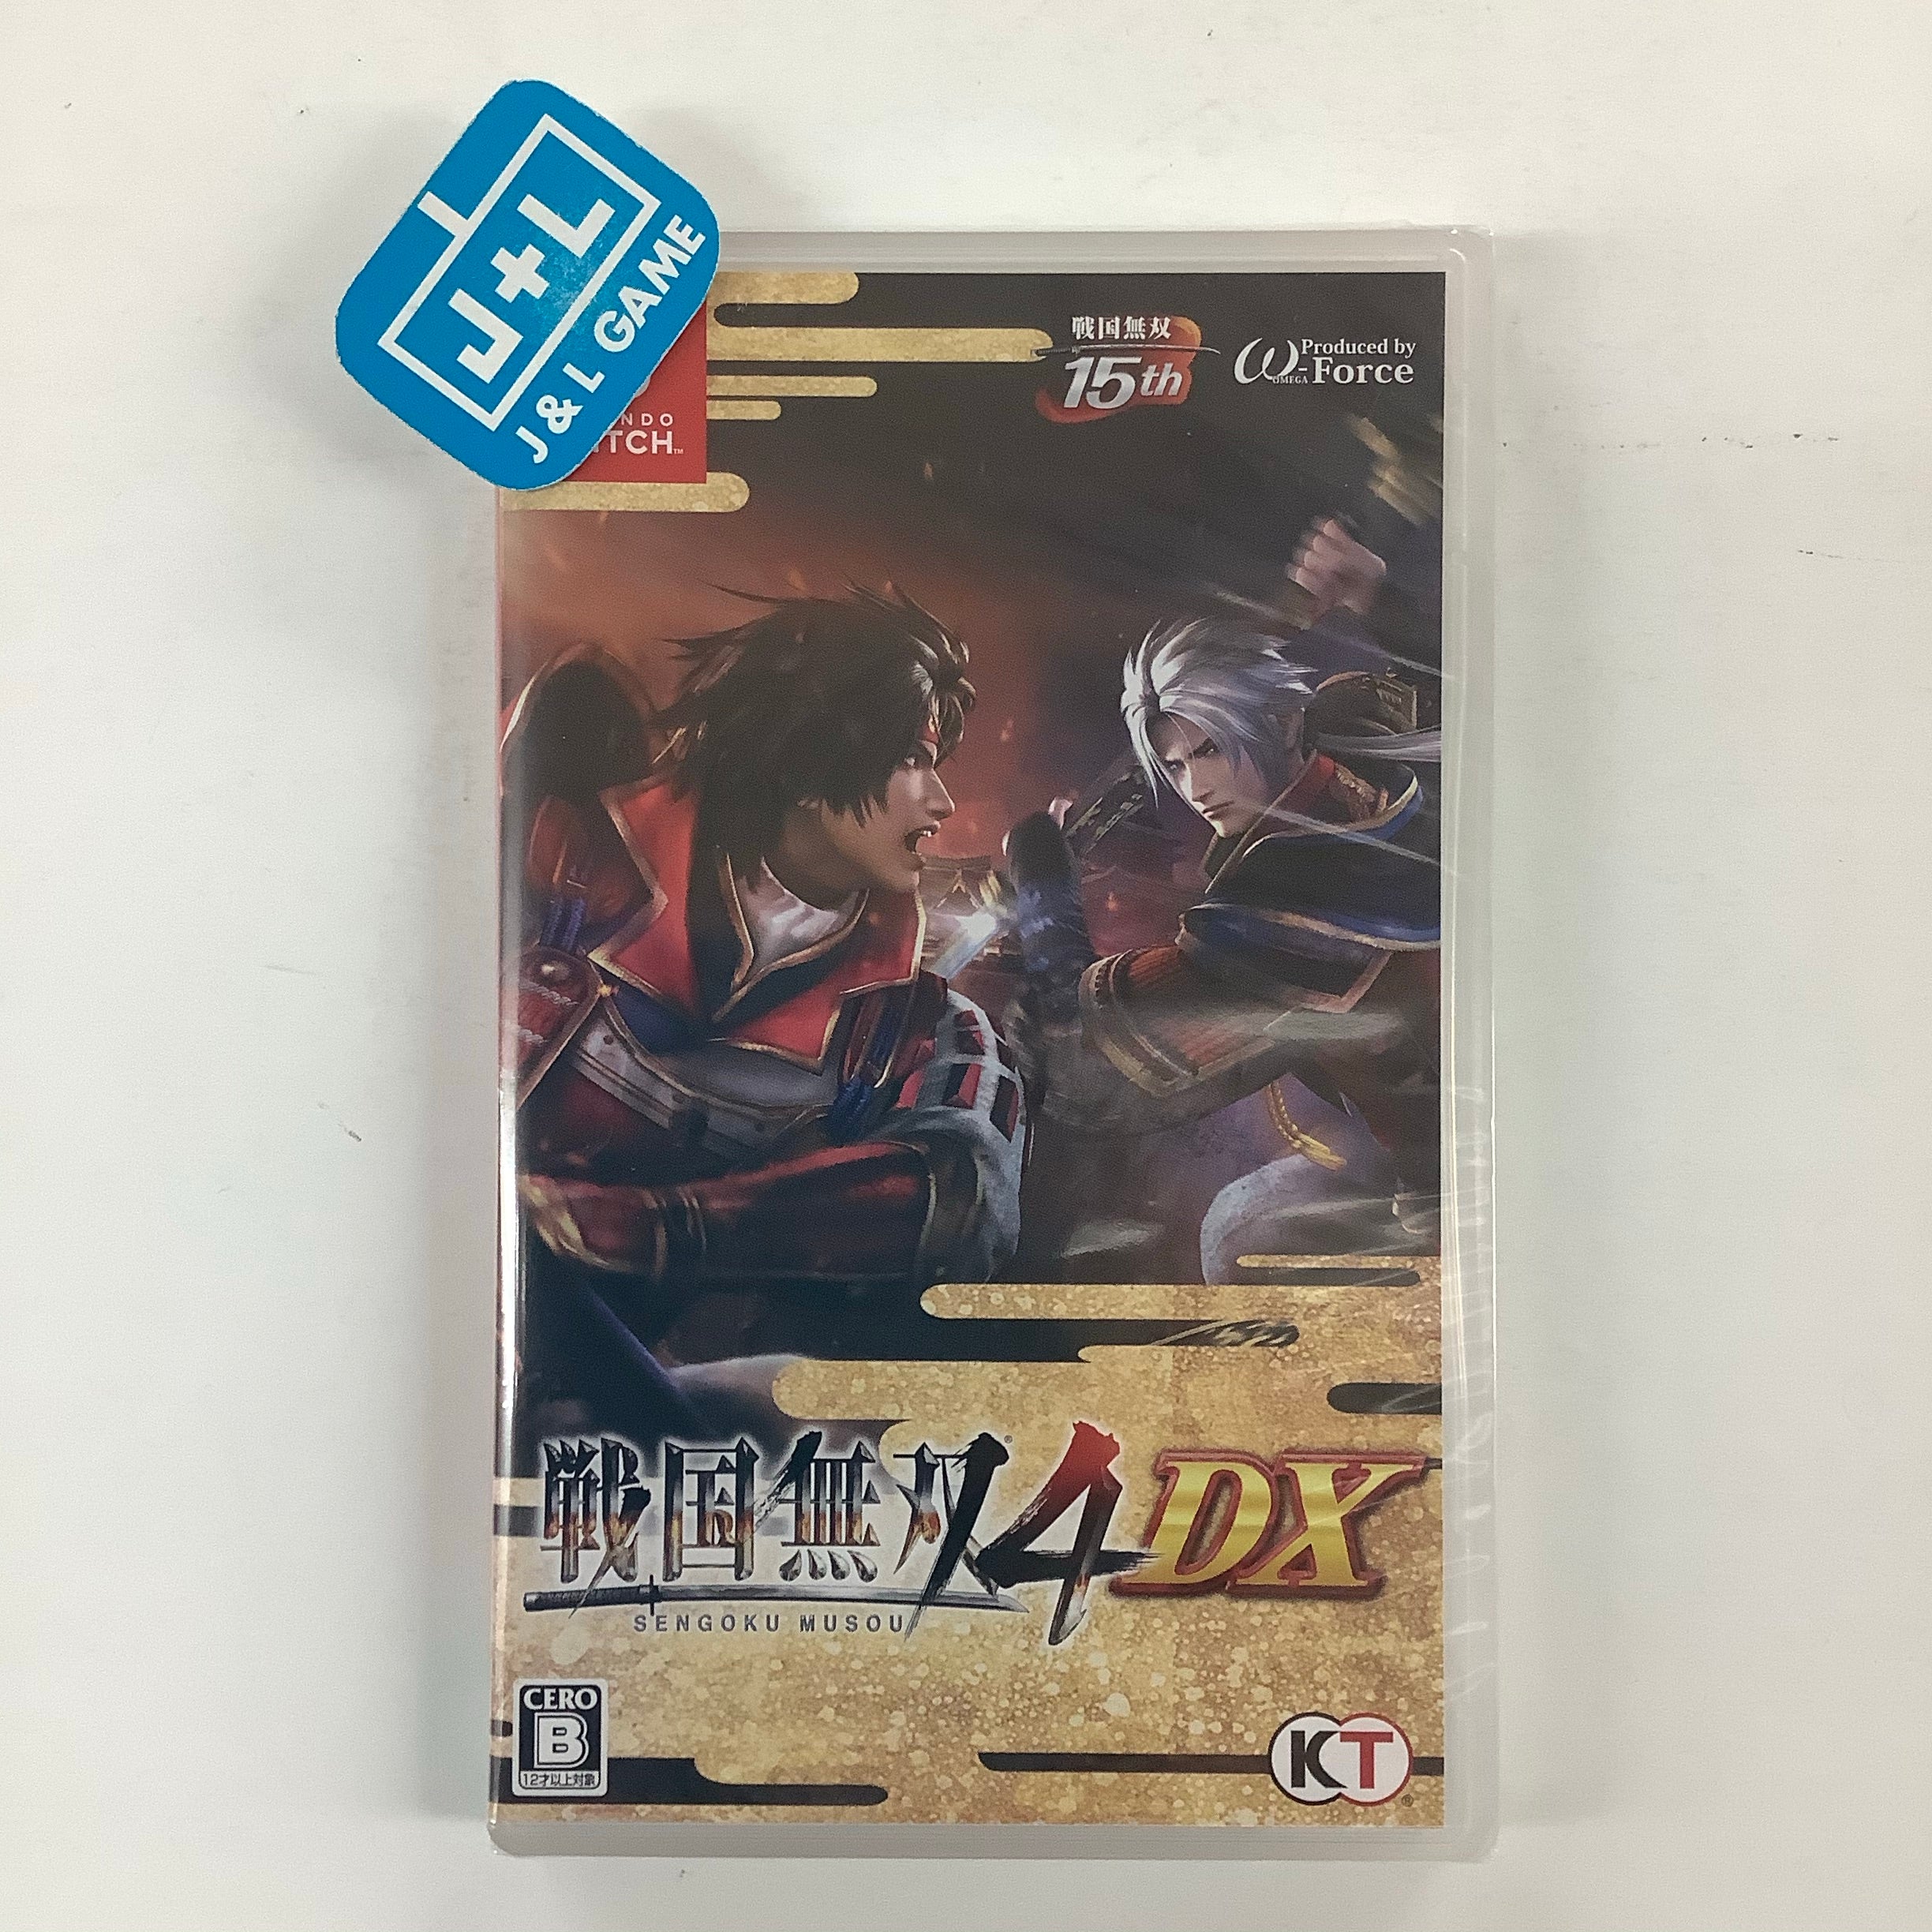 Samurai Warriors 4 DX - (NSW) Nintendo Switch (Japanese Import) Video Games Koei Tecmo Games   